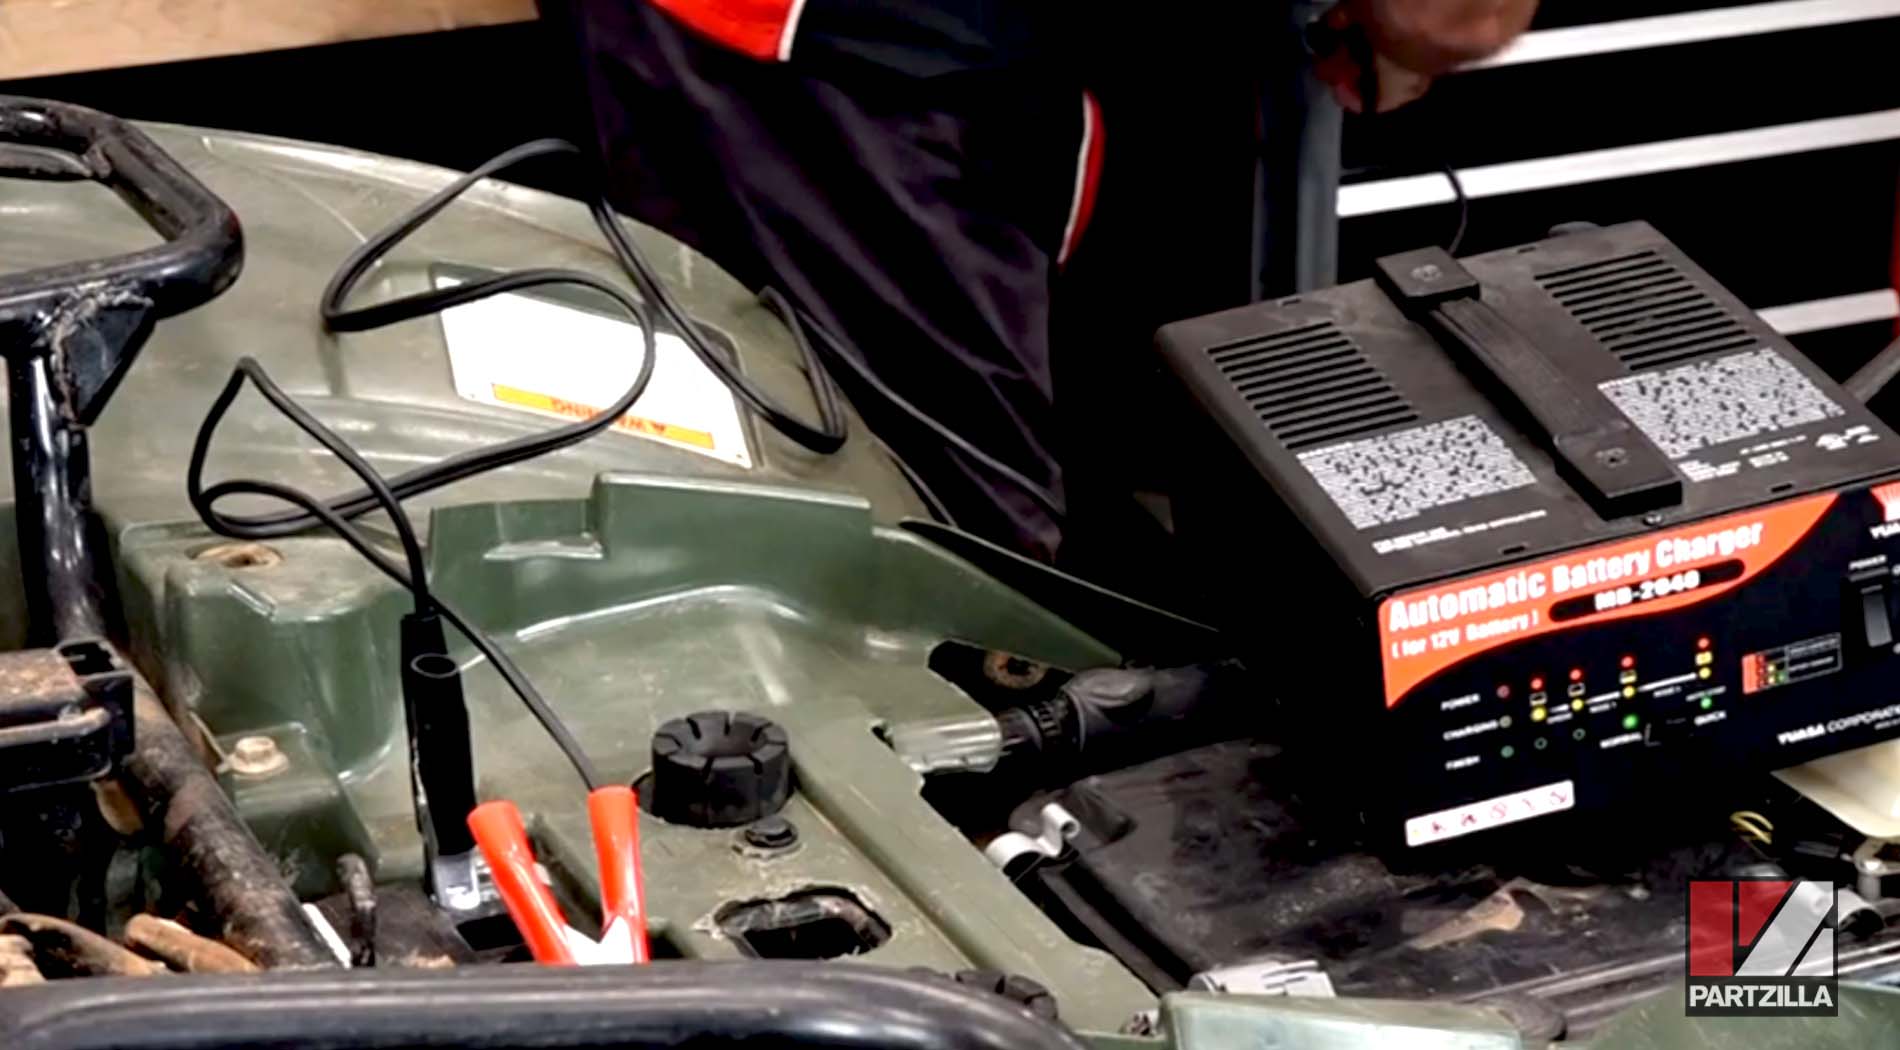 Honda Rancher 420 battery charging